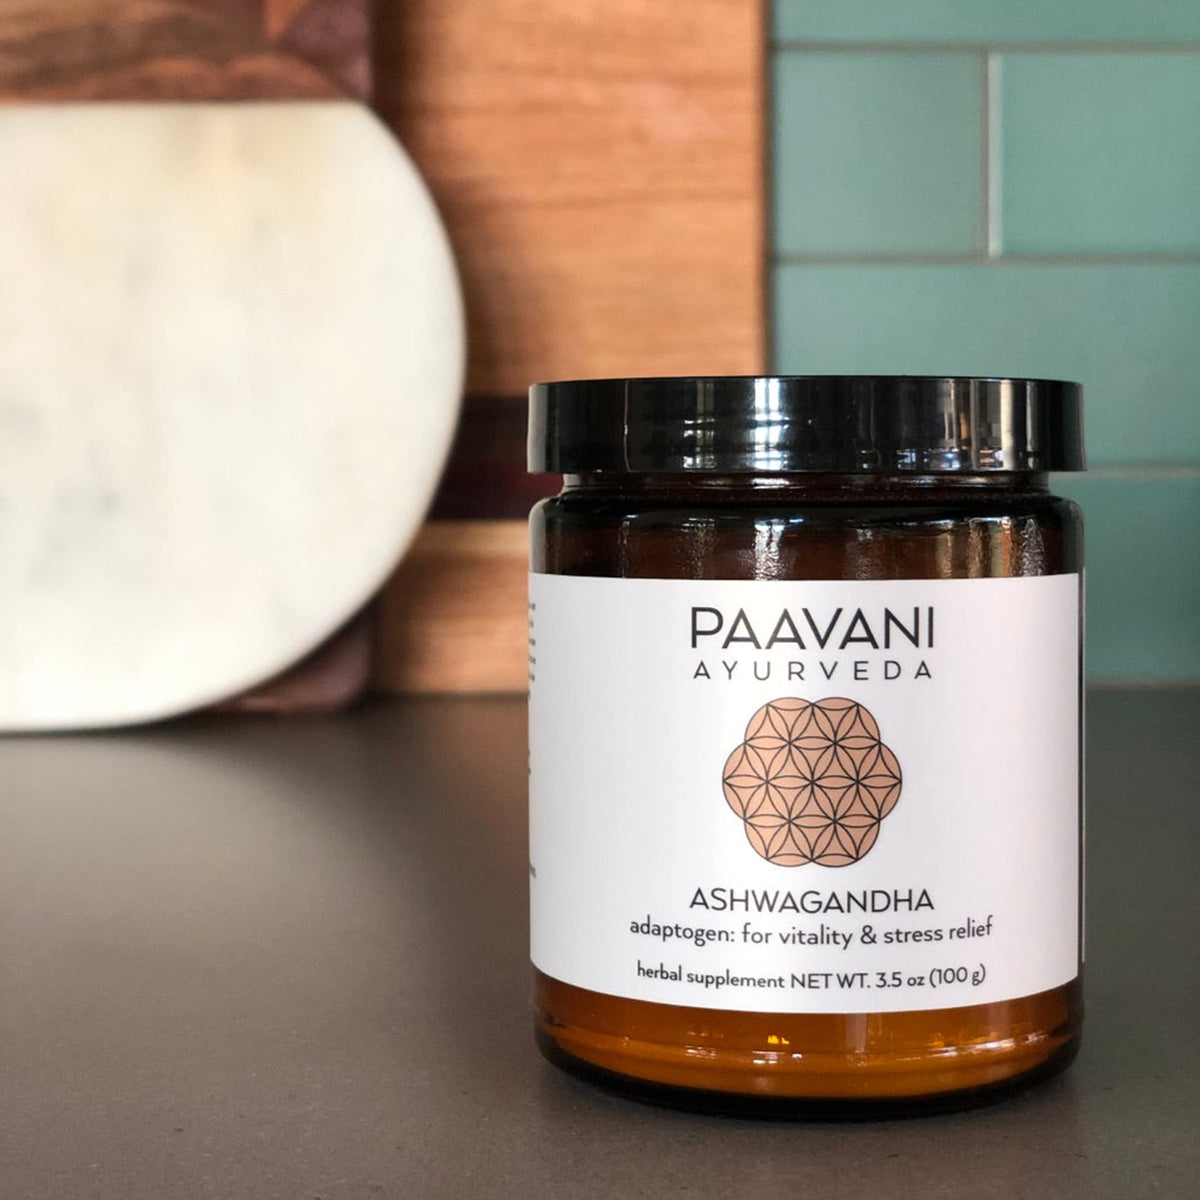 Paavani Ayurveda - Organic Ashwagandha, Adaptogenic Ayurvedic Herbs 9 oz.